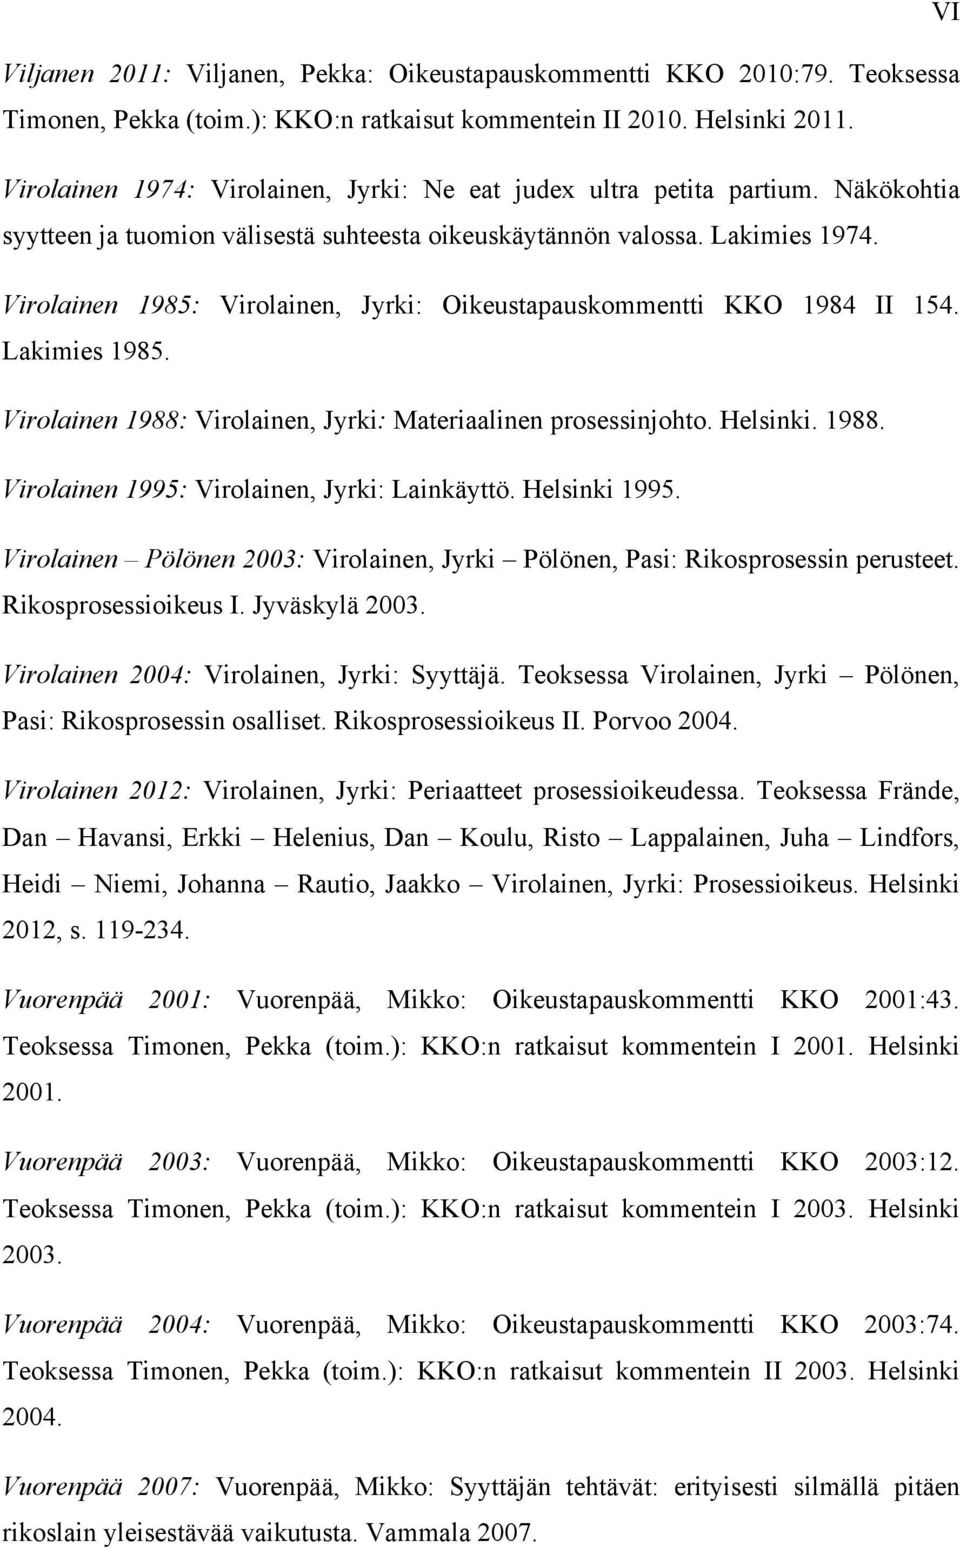 Virolainen 1985: Virolainen, Jyrki: Oikeustapauskommentti KKO 1984 II 154. Lakimies 1985. Virolainen 1988: Virolainen, Jyrki: Materiaalinen prosessinjohto. Helsinki. 1988. Virolainen 1995: Virolainen, Jyrki: Lainkäyttö.